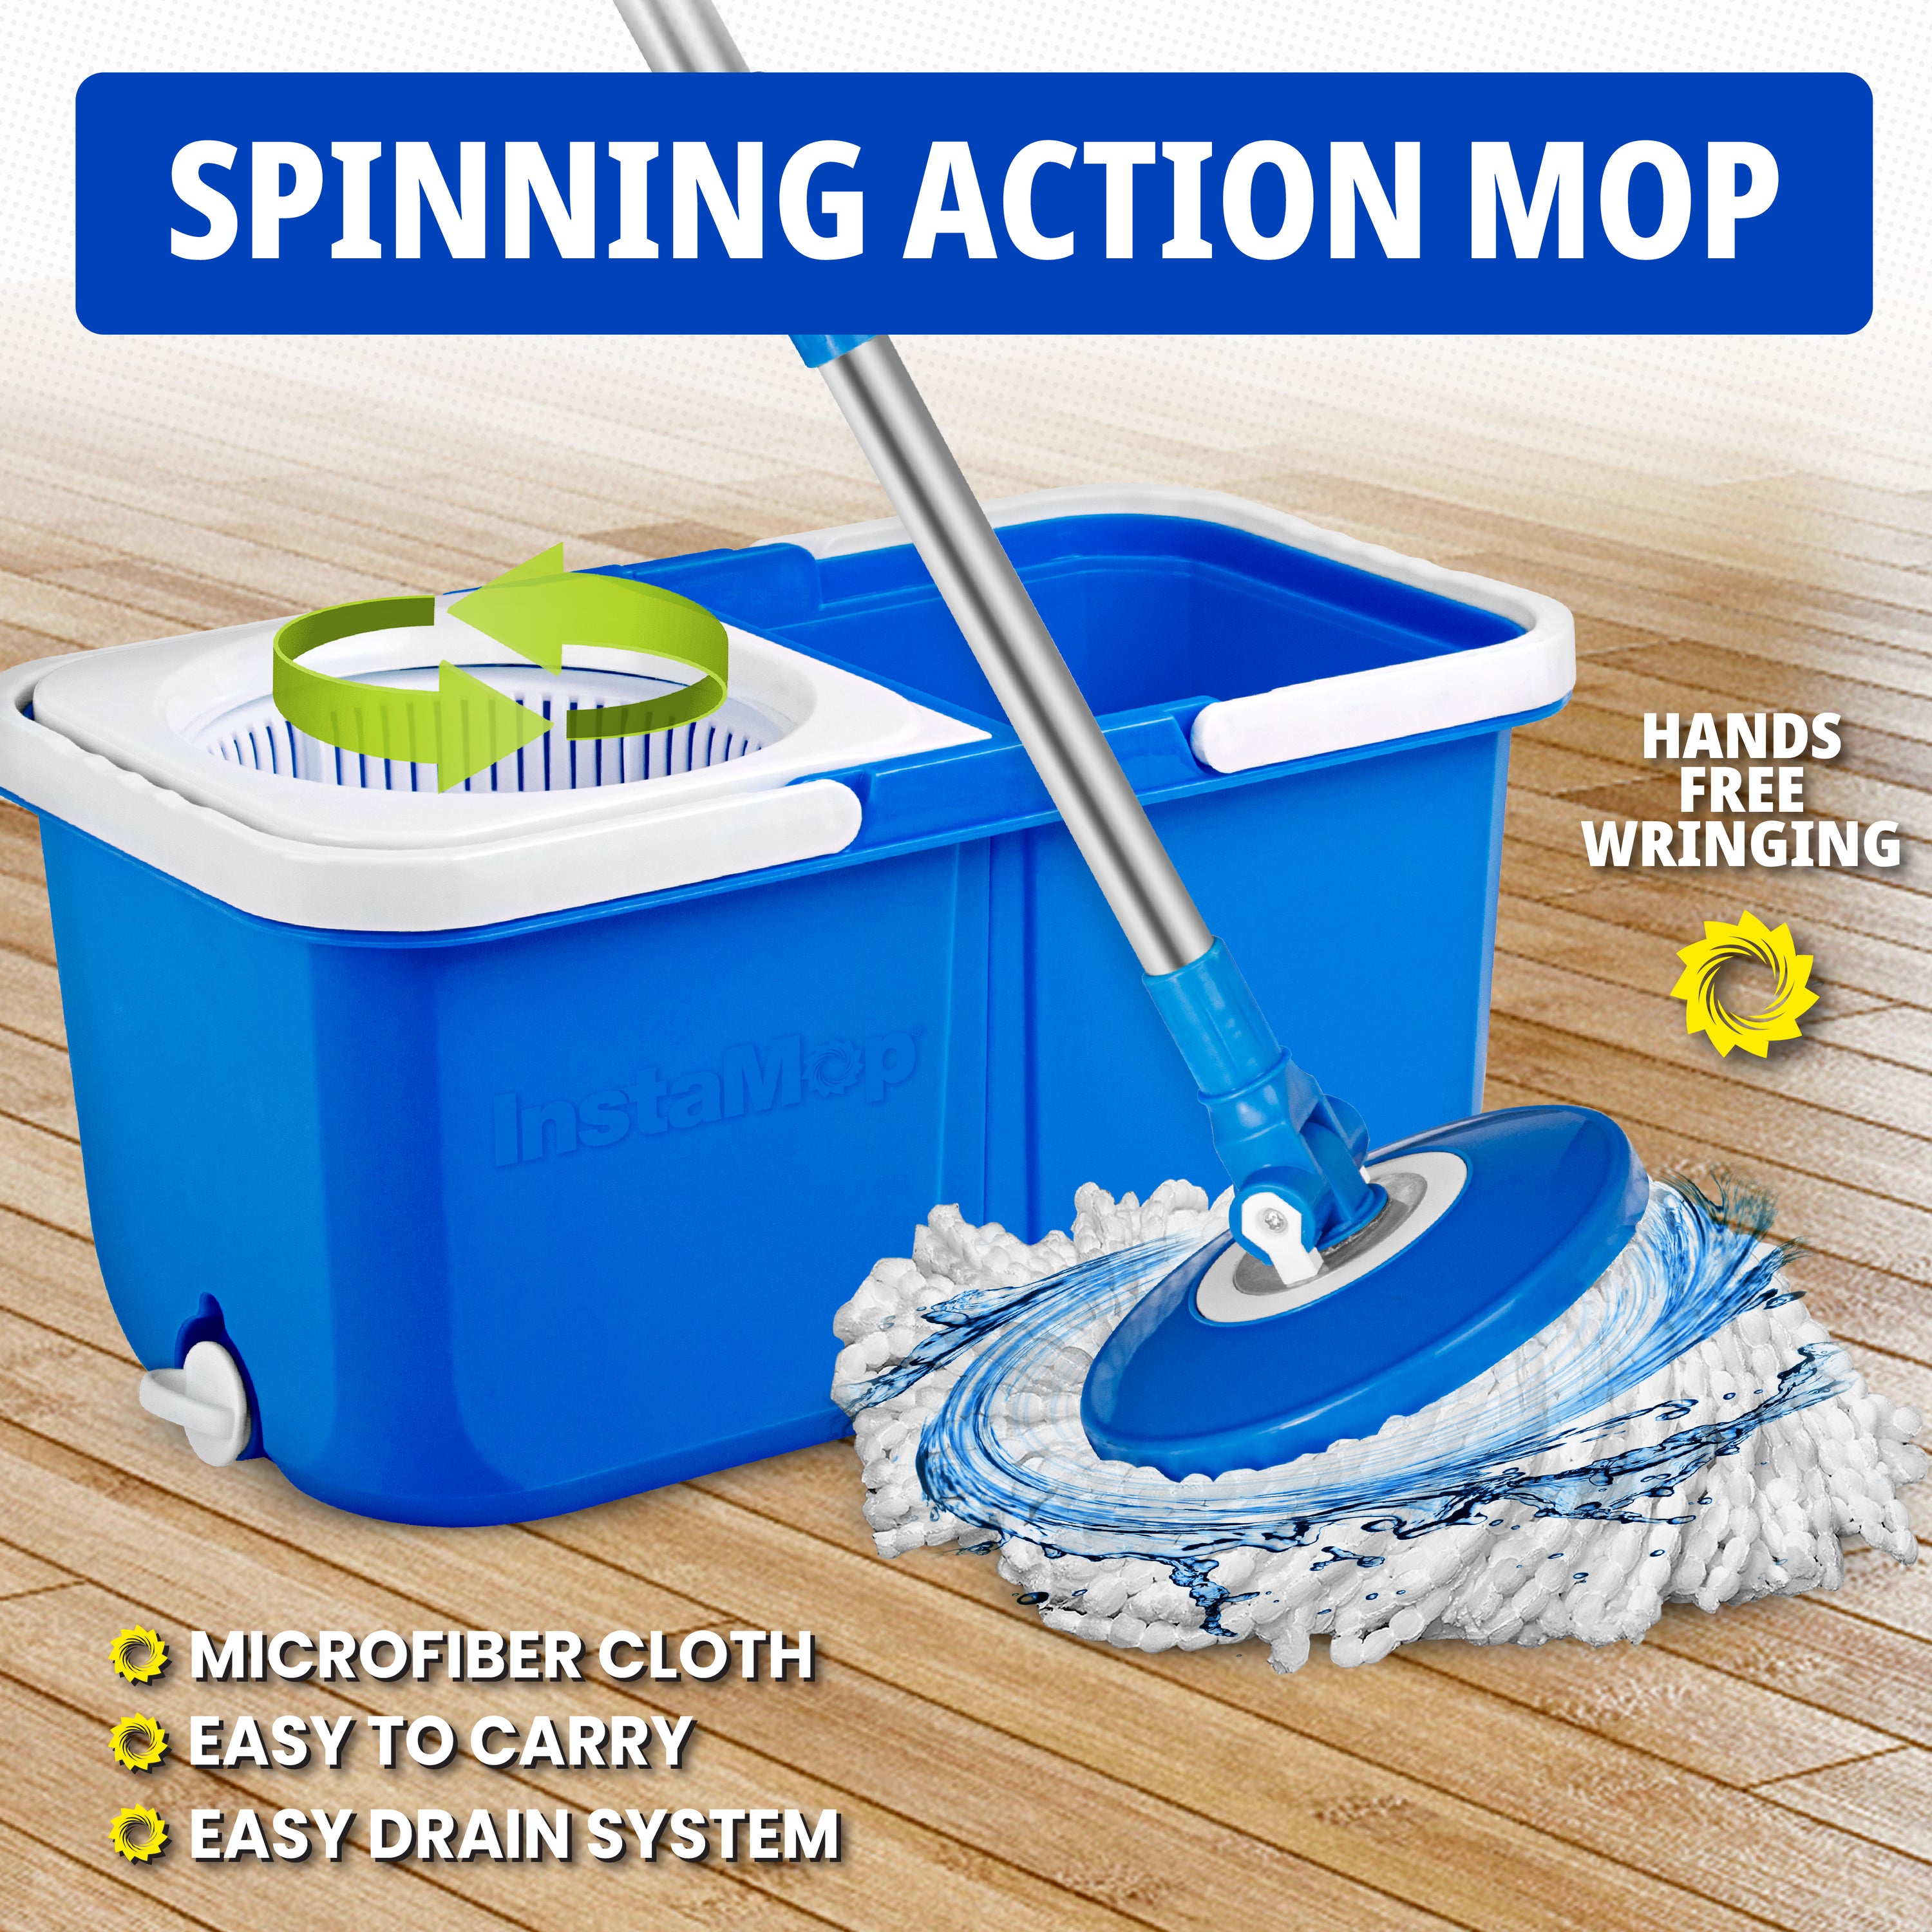 Instamop Sinning Action Mop